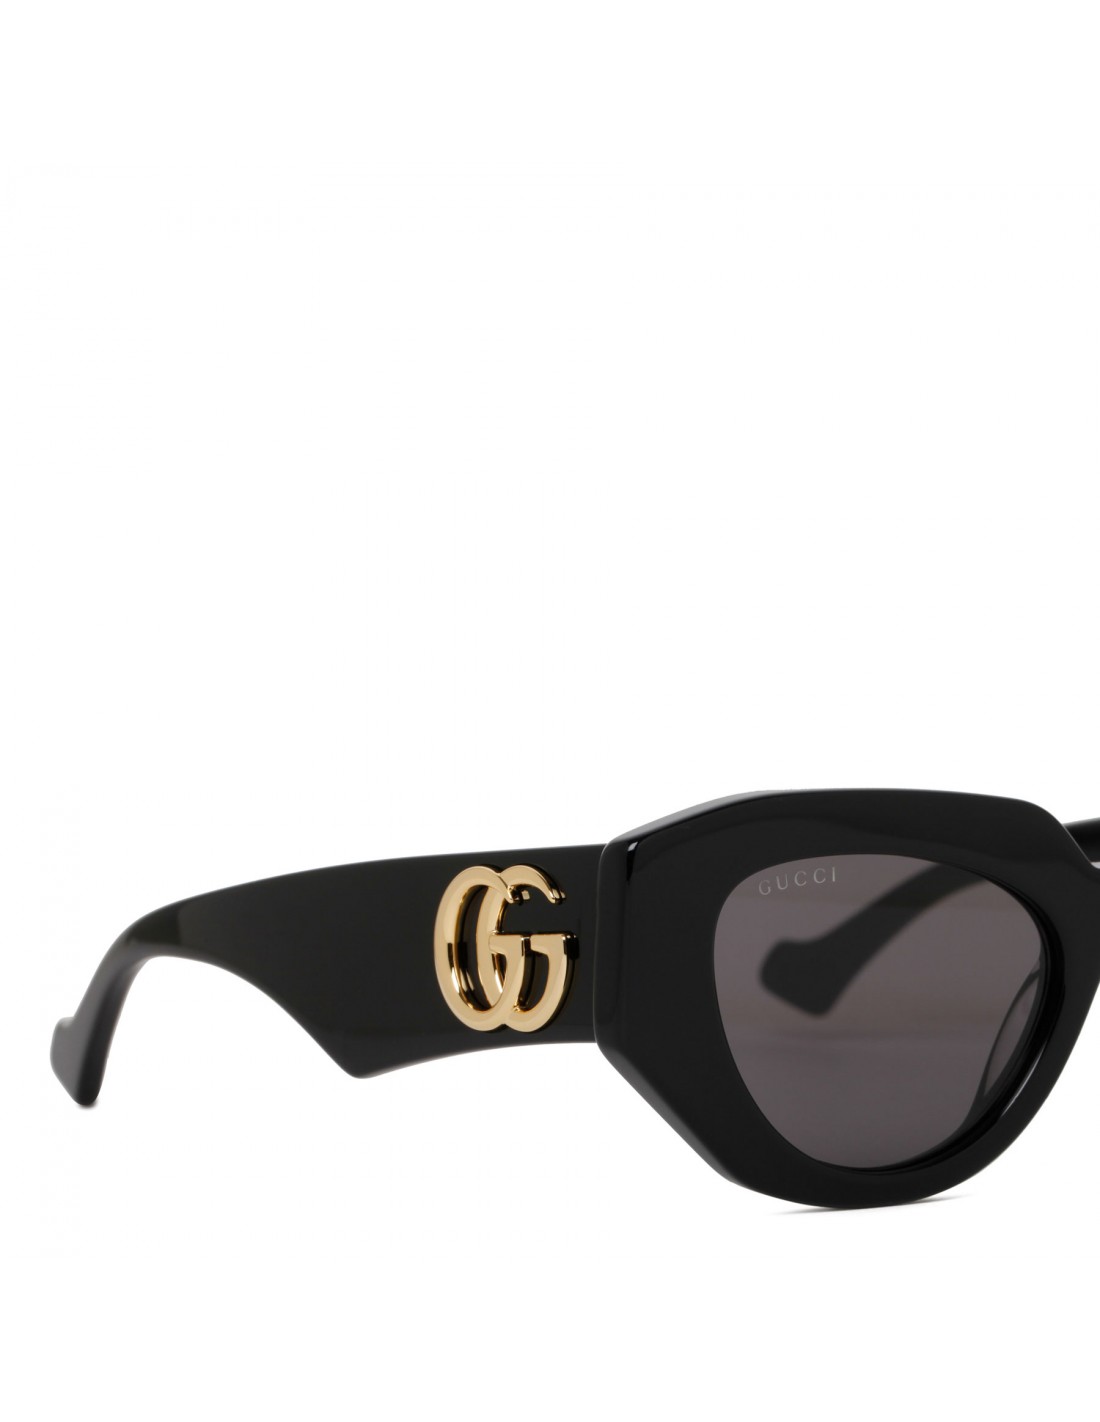 Geometric black sunglasses